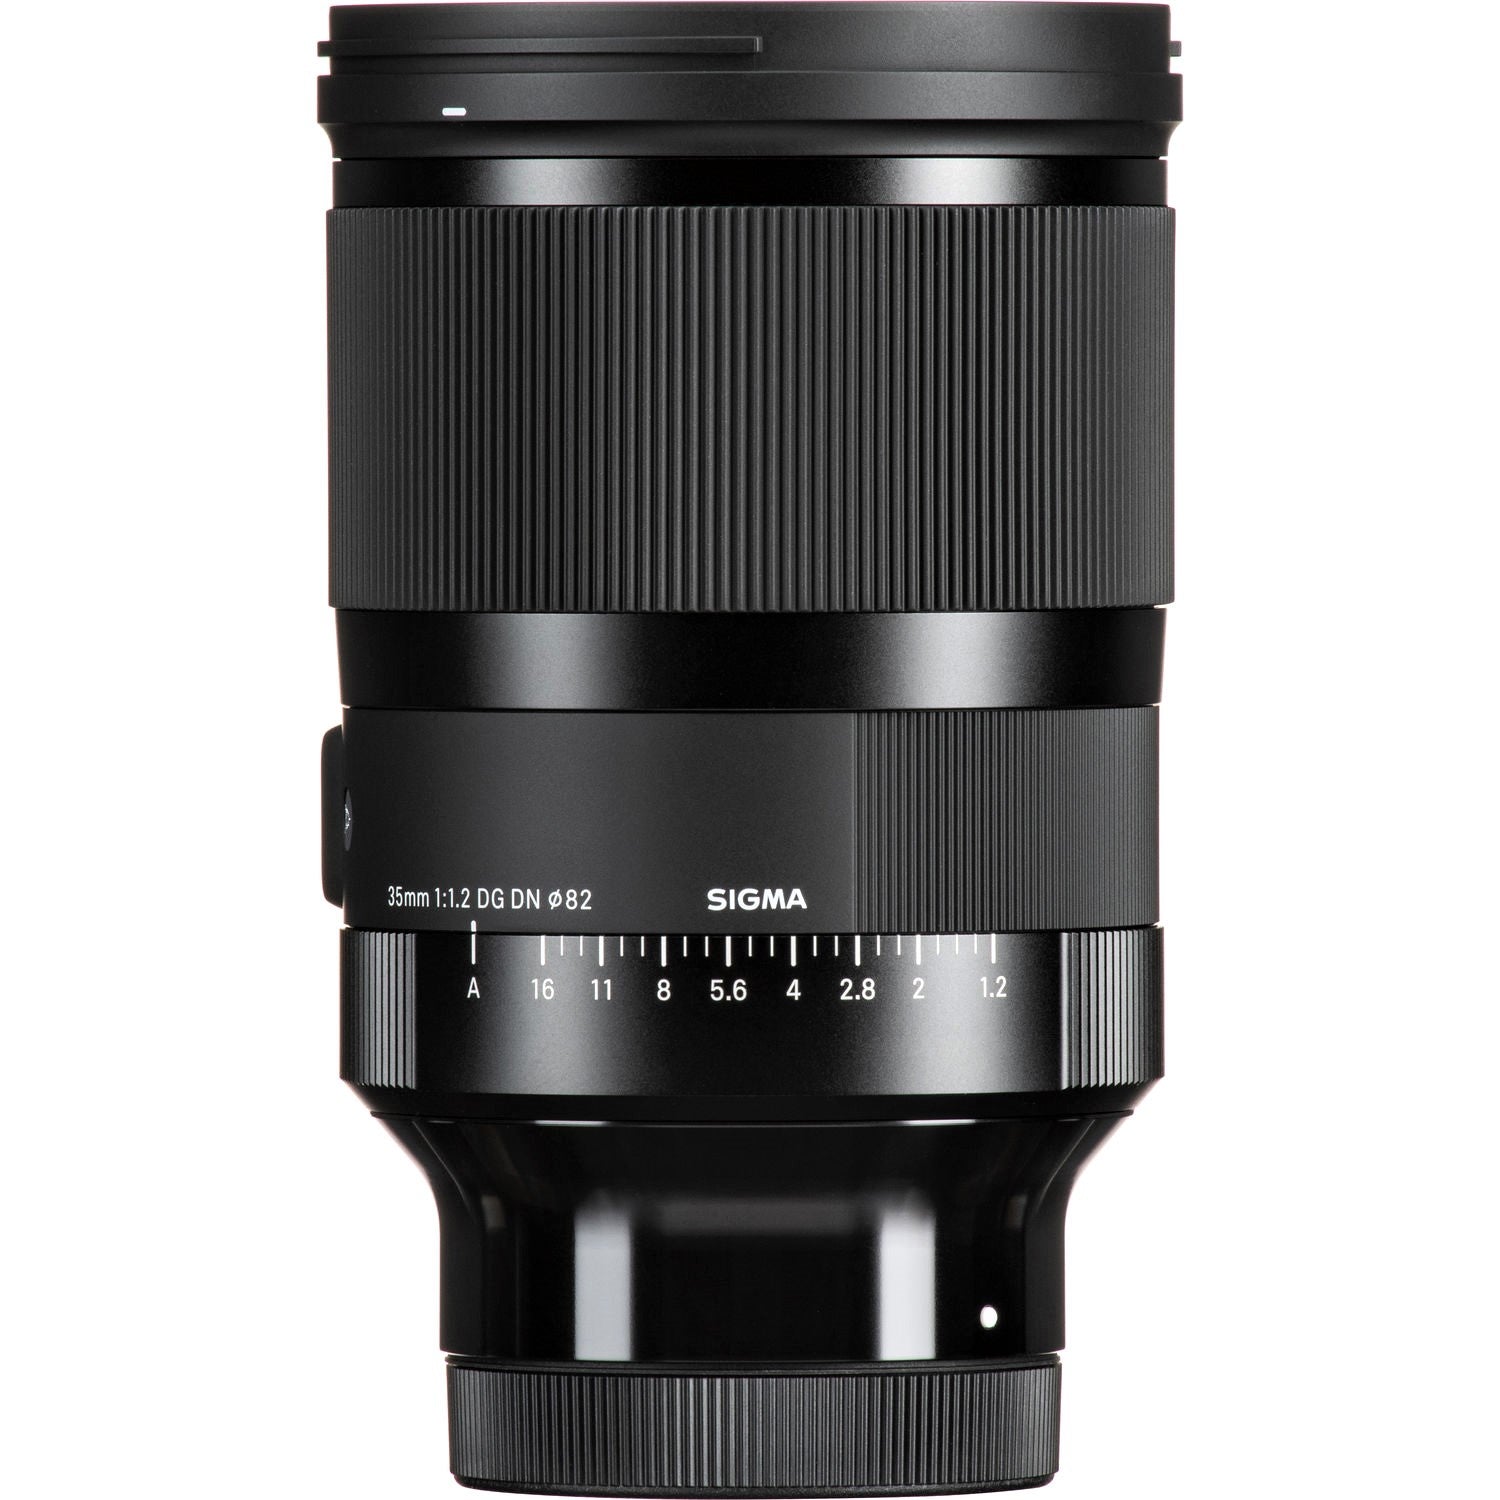 Sigma 35mm F1.2 DG DN Art Lens for Leica L